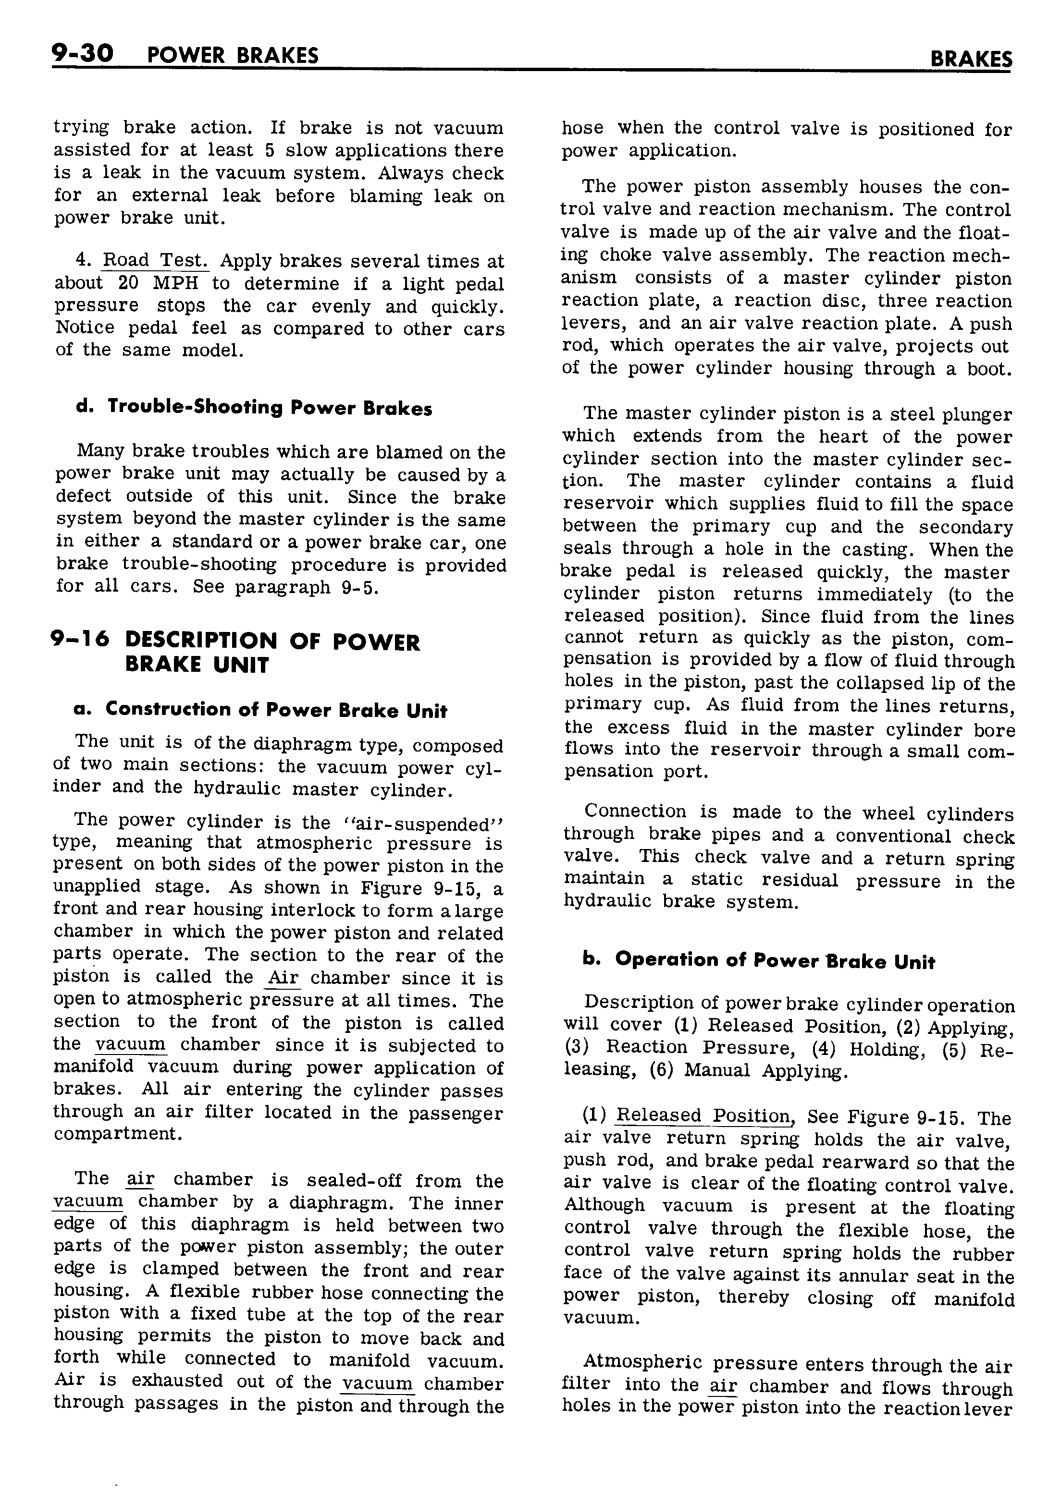 n_09 1961 Buick Shop Manual - Brakes-030-030.jpg